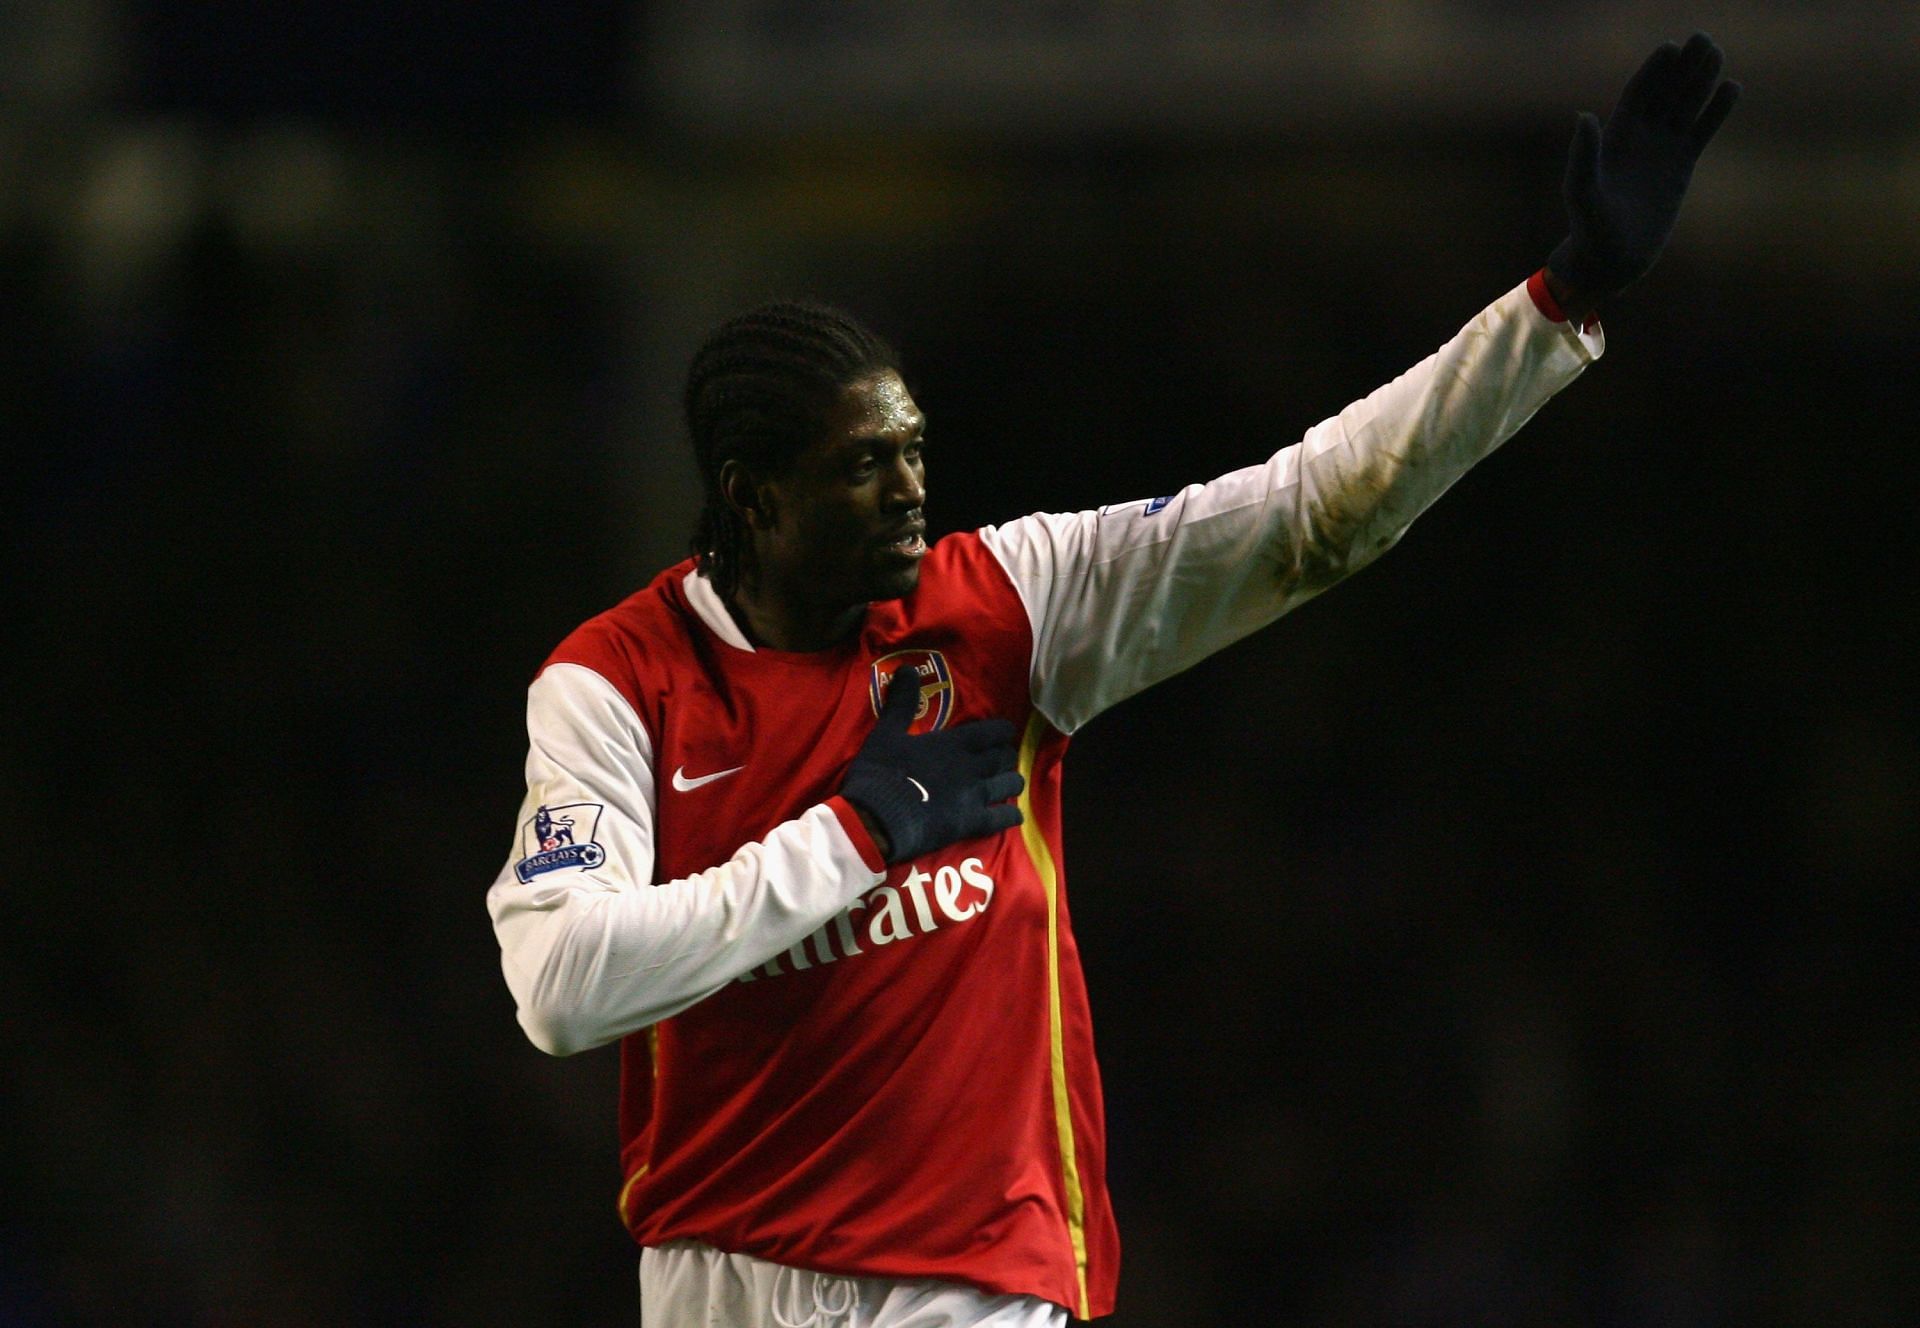 Adebayor captured in a Premier League game.